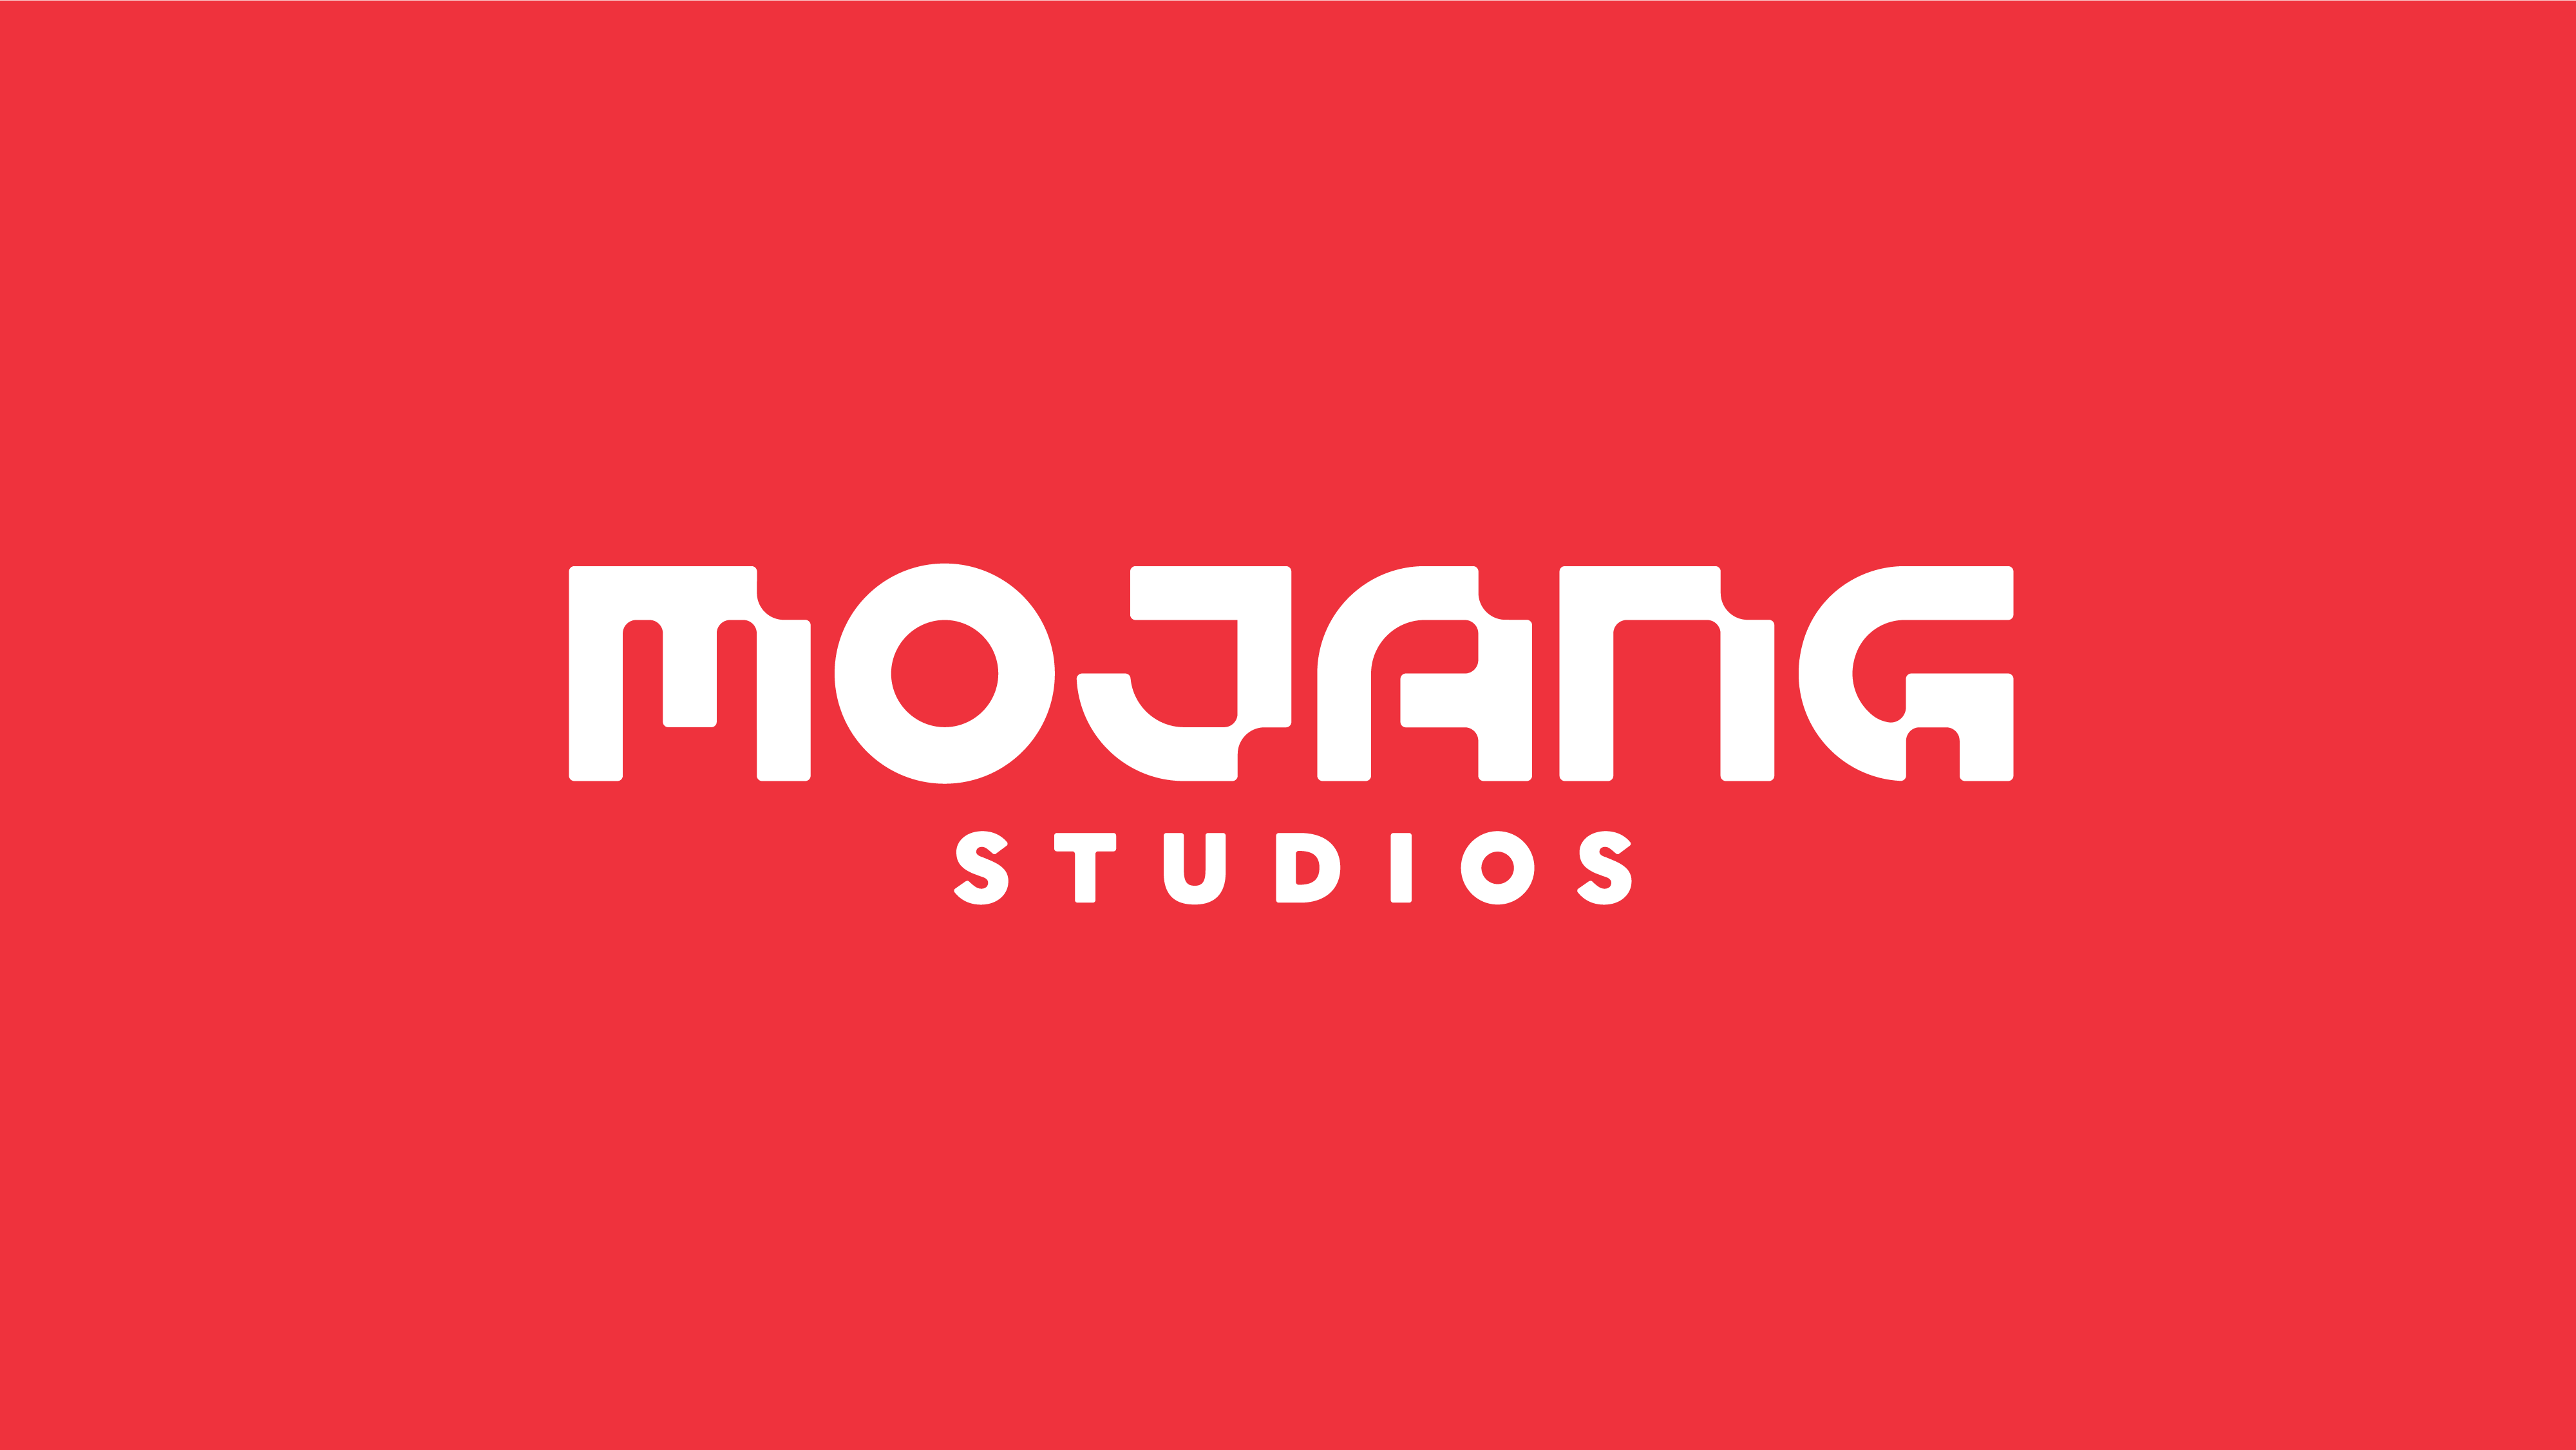 Mojang Studios Brand Identity